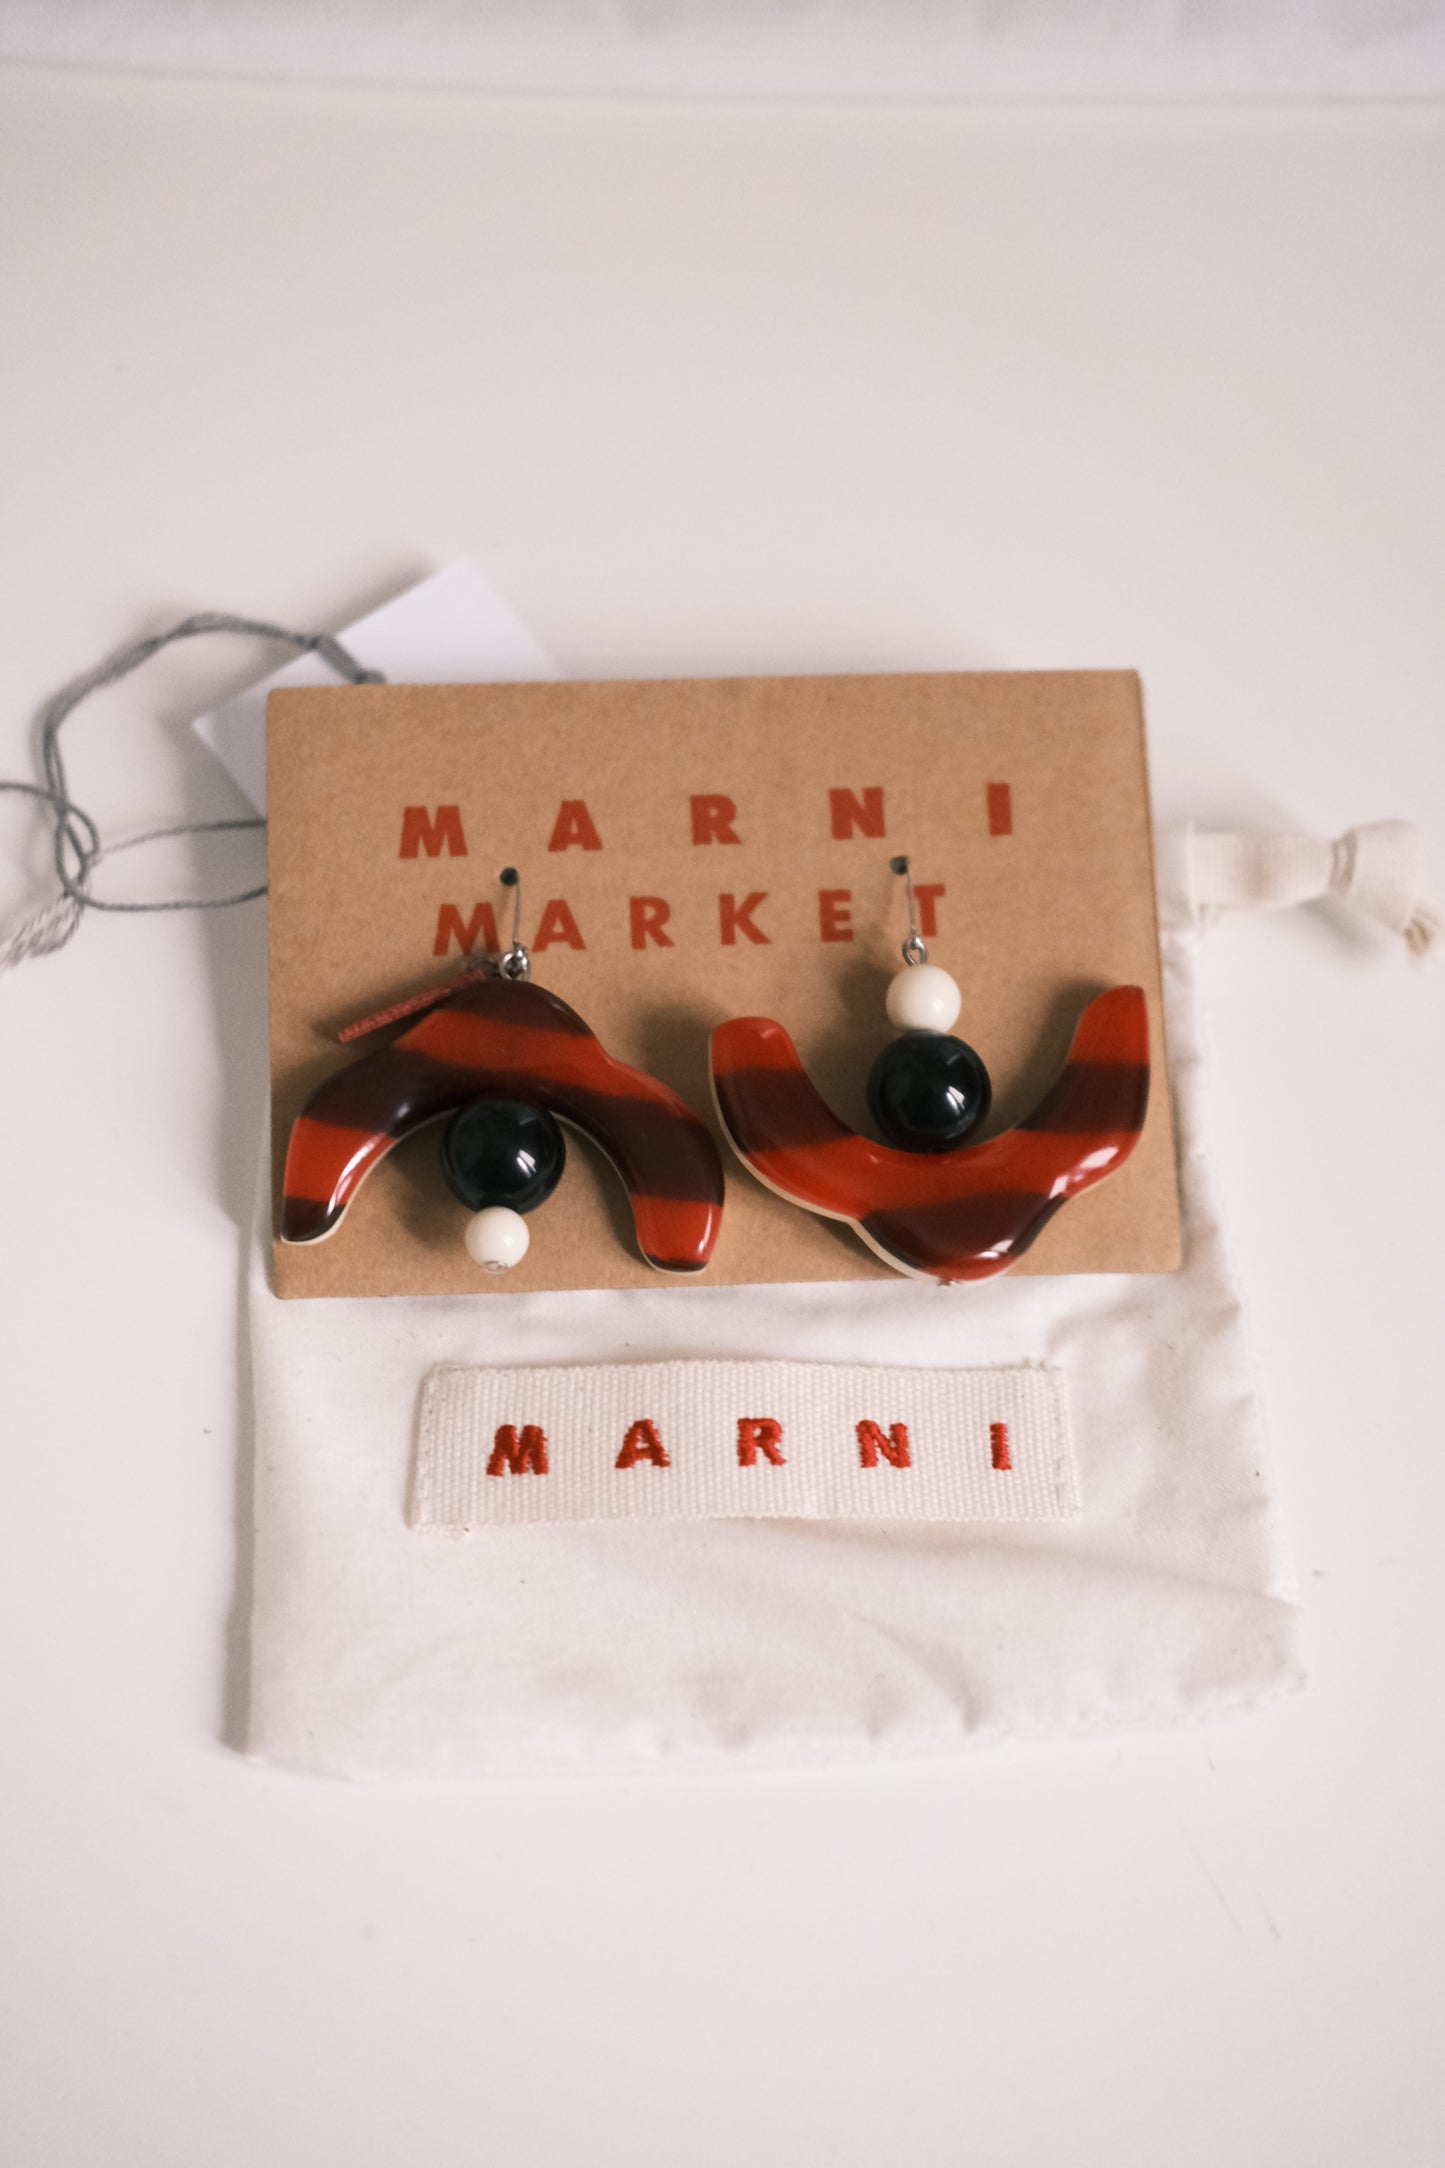 marni market earrings